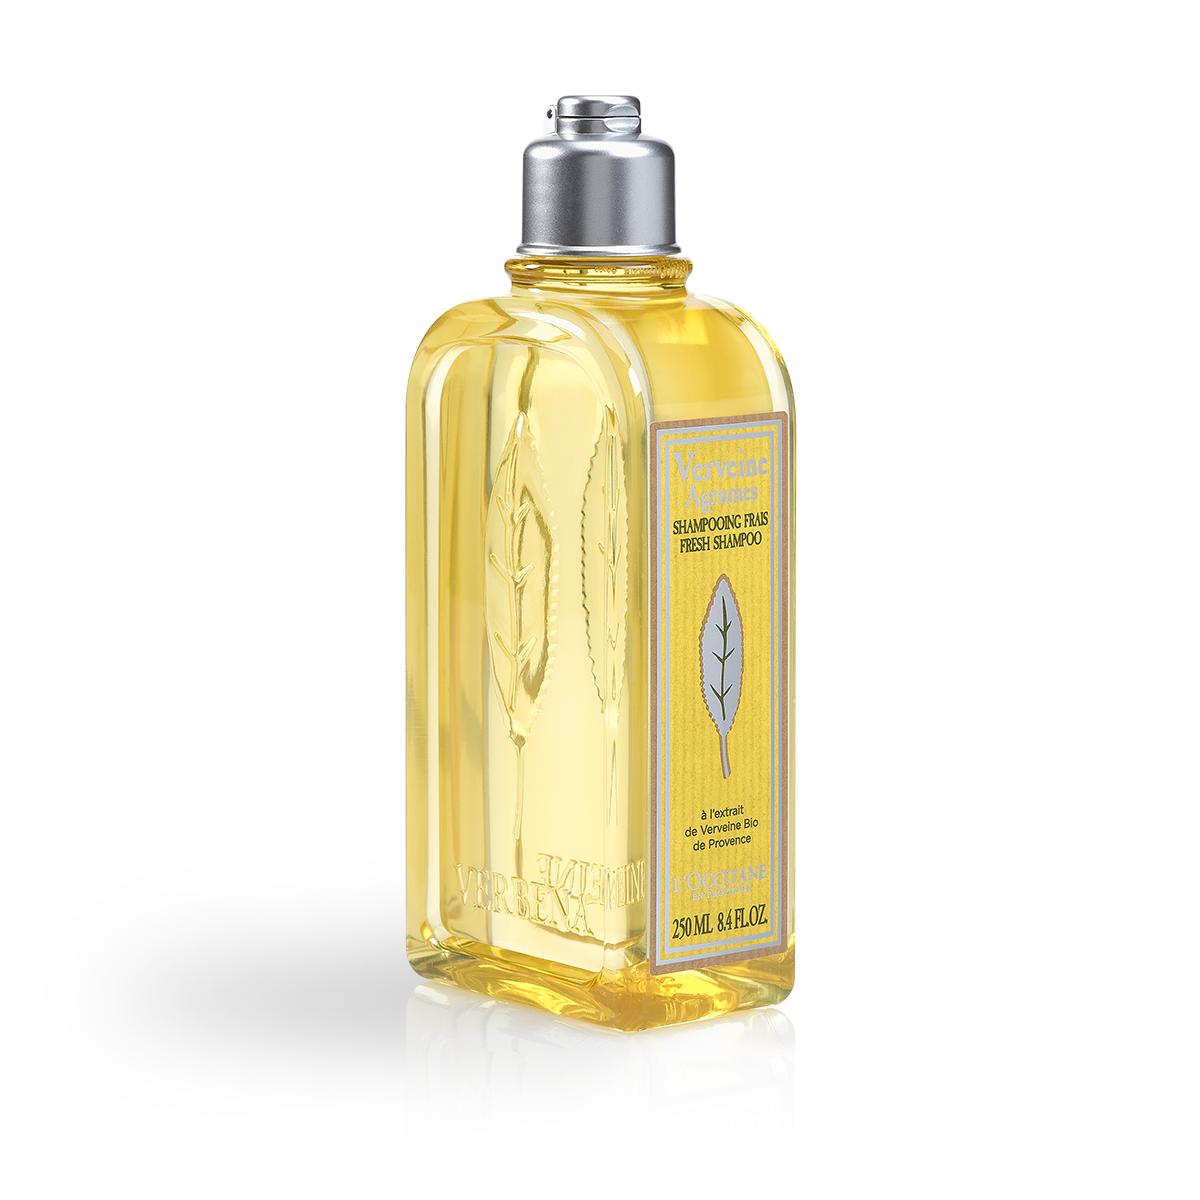 Shampoo Refrescante Citrus Verbena, , large image number 2